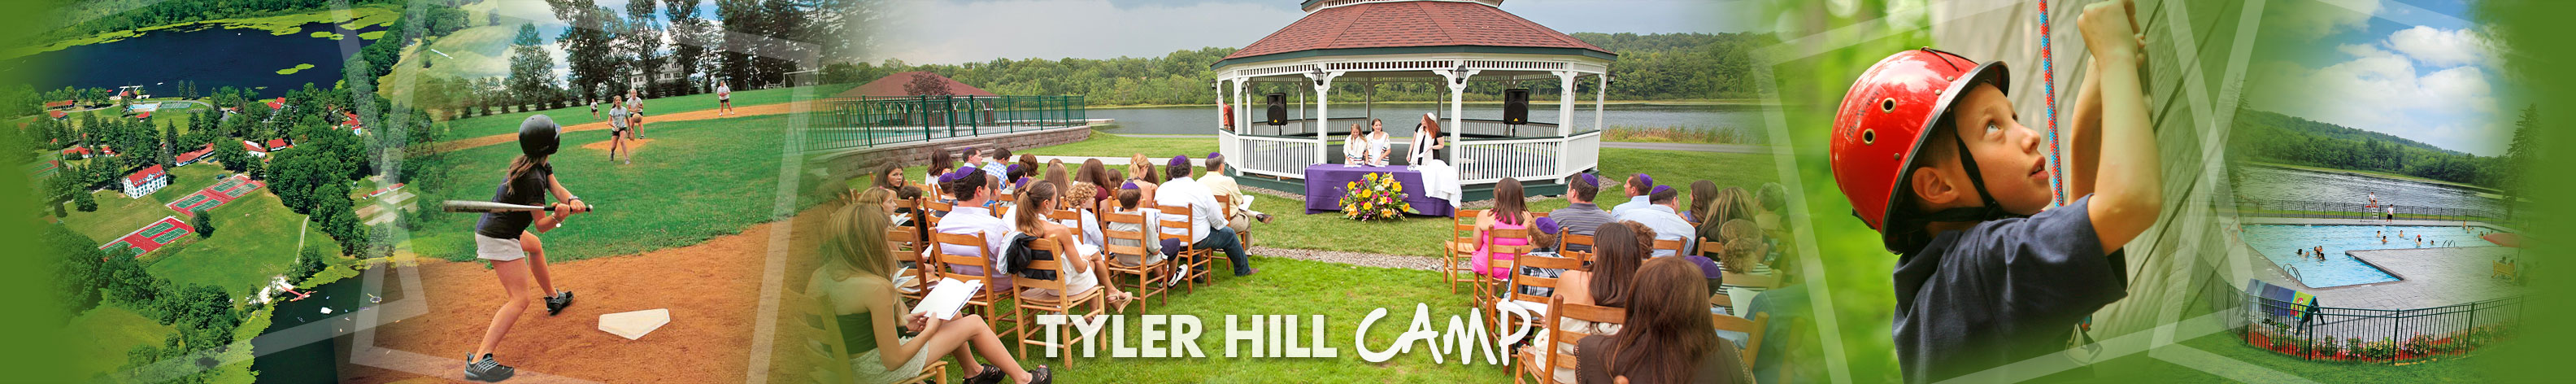 tyler hill camp rentals